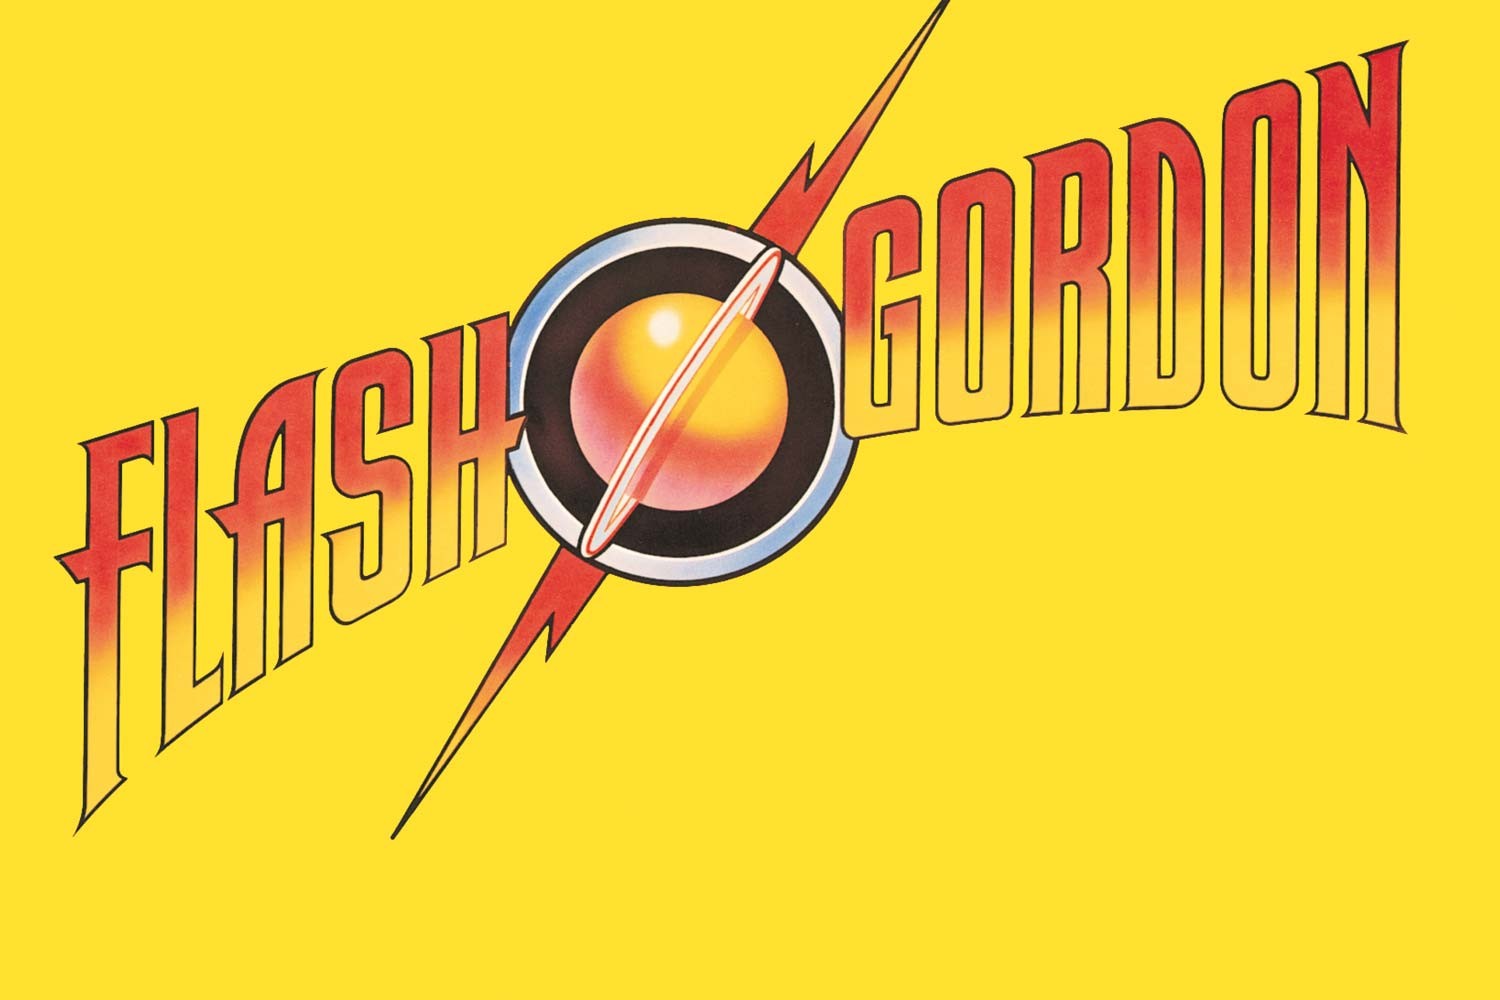 Flash Gordon Backgrounds on Wallpapers Vista